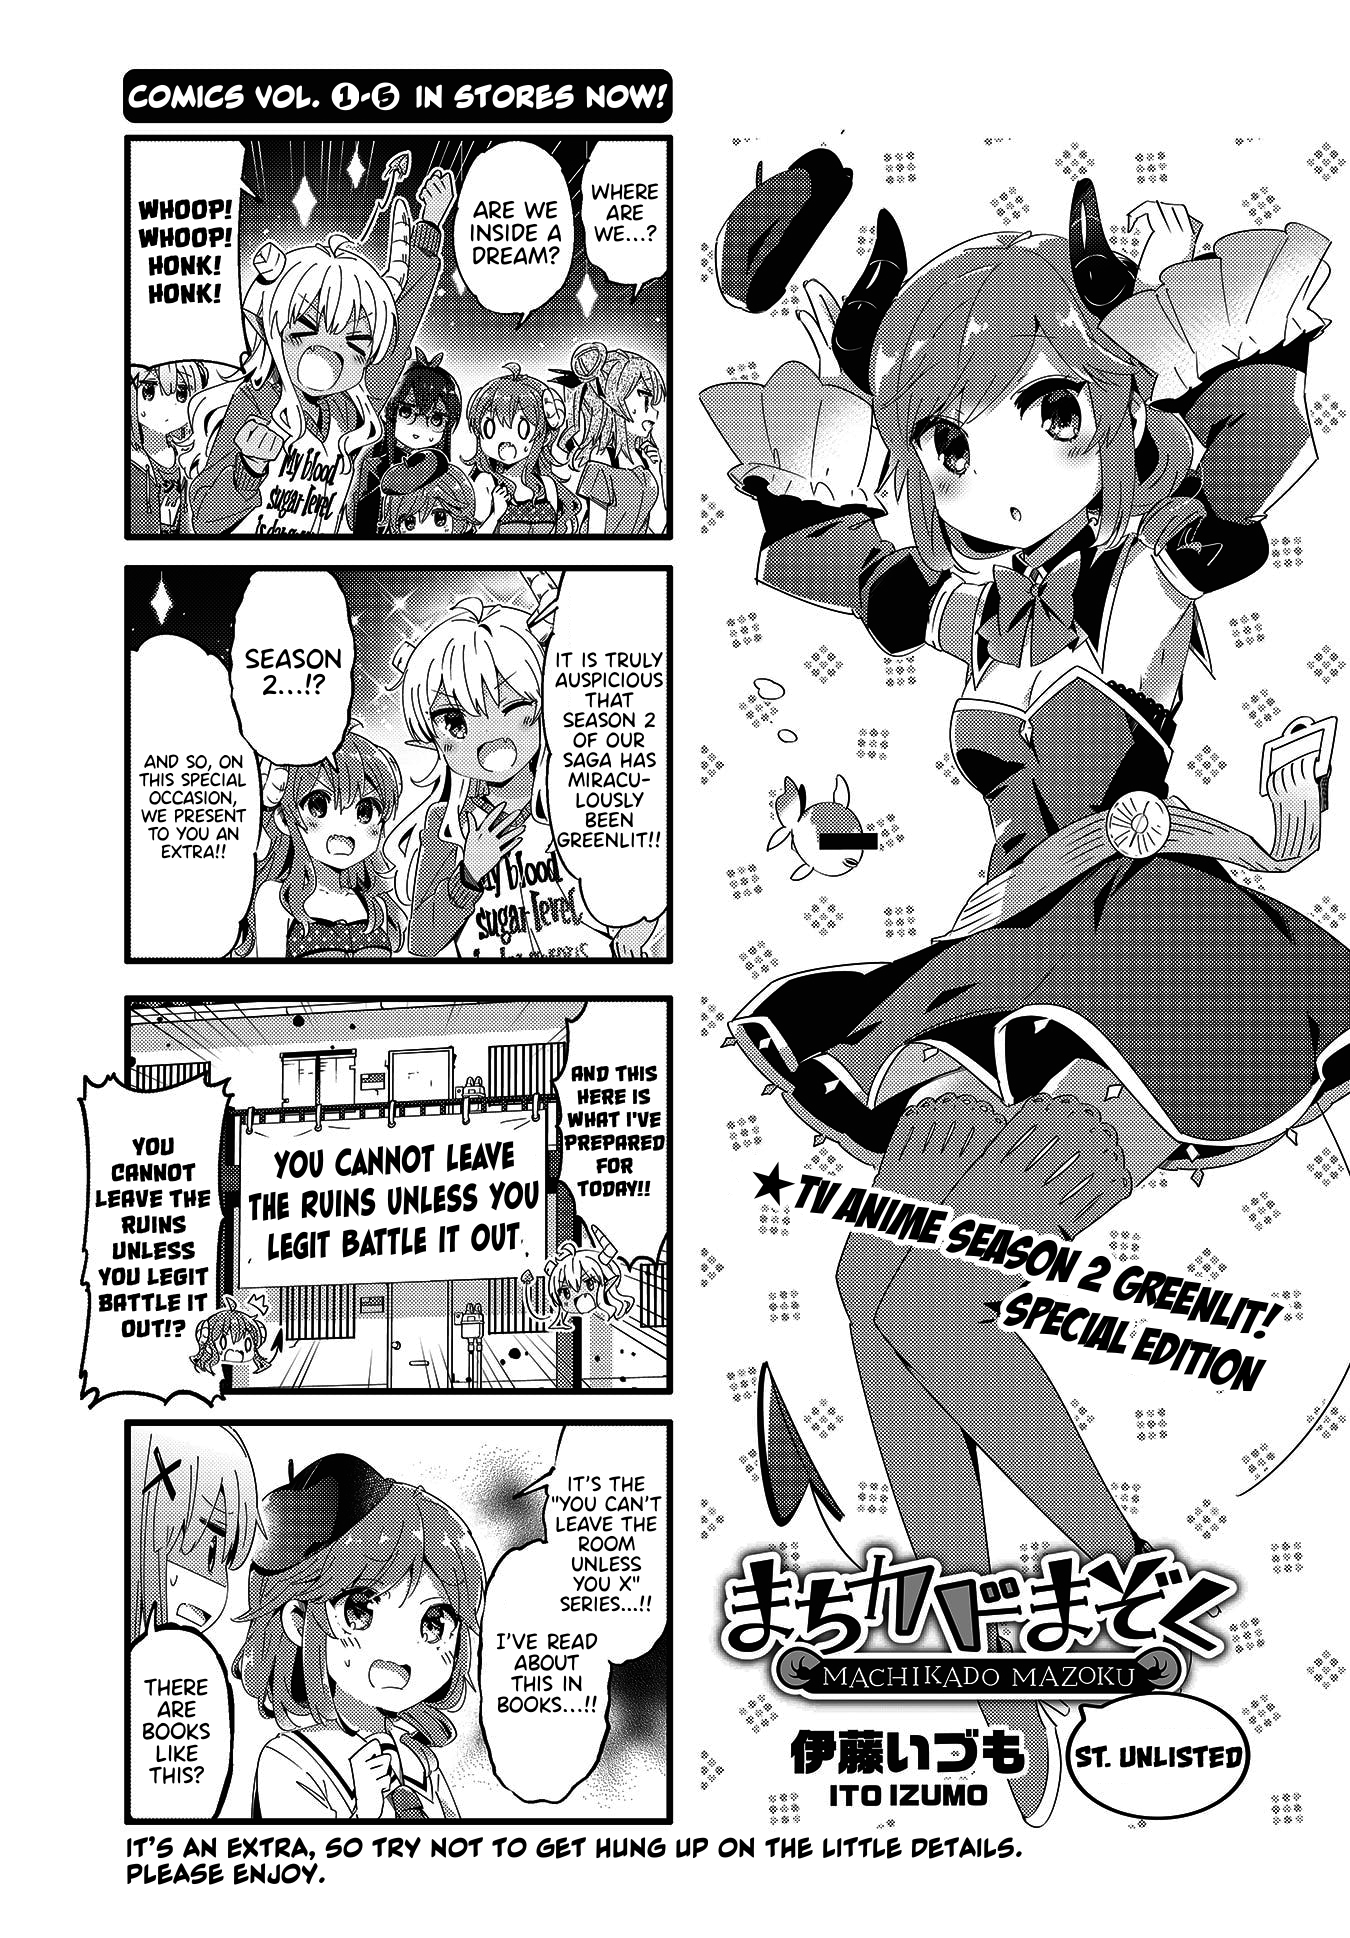 Machikado Mazoku Chapter 74.5: Anime Special Edition - Picture 1